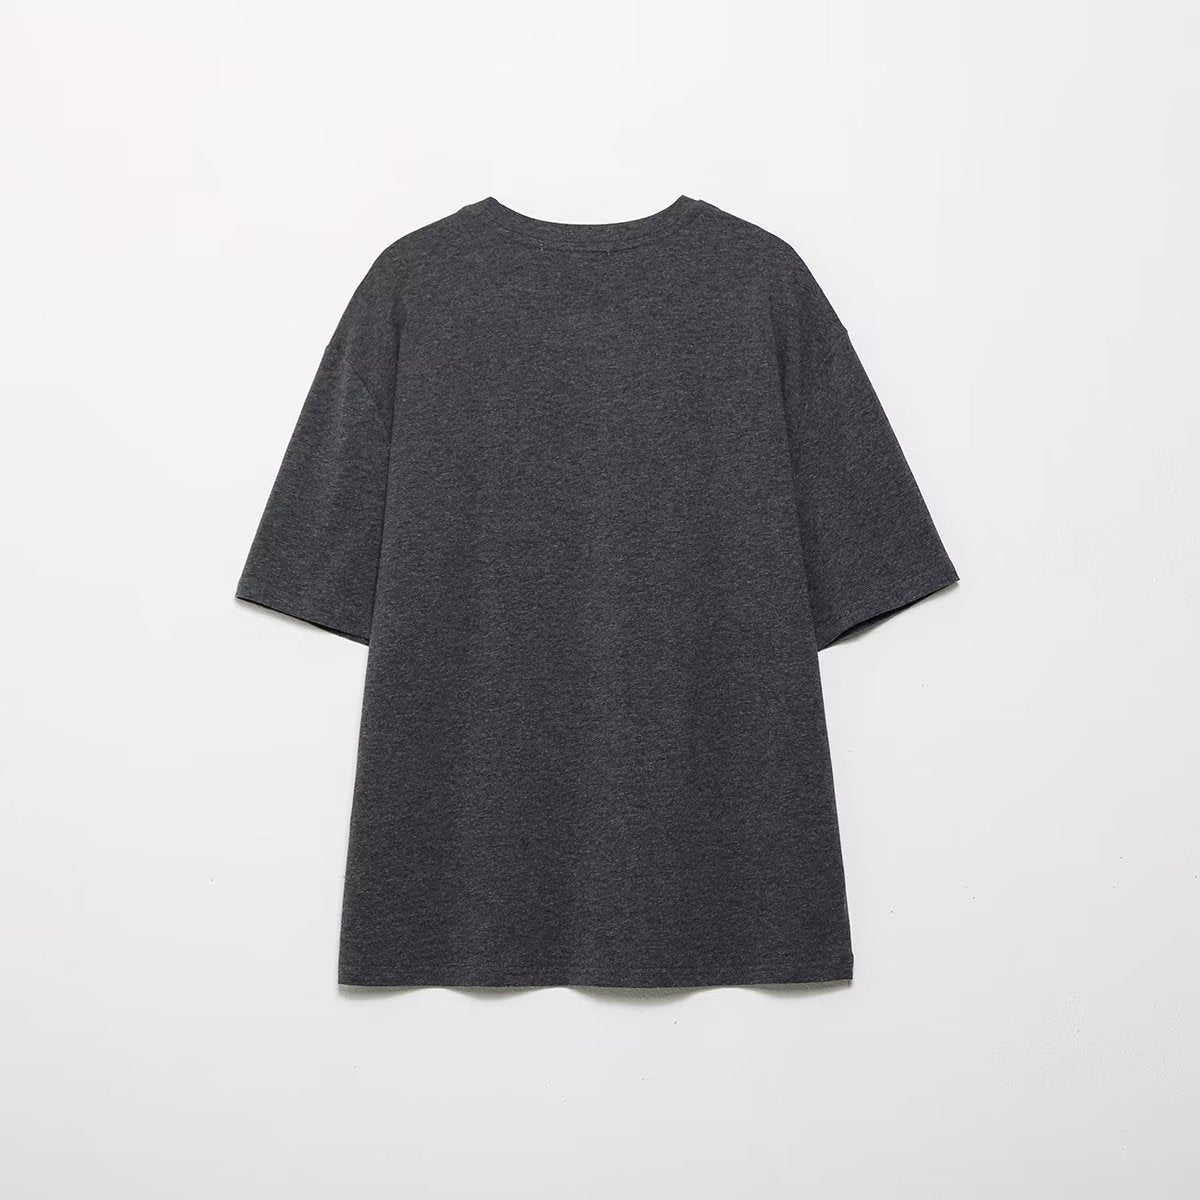 Autumn Women Clothing Washed Effect Printed Short Sleeve T Shirt